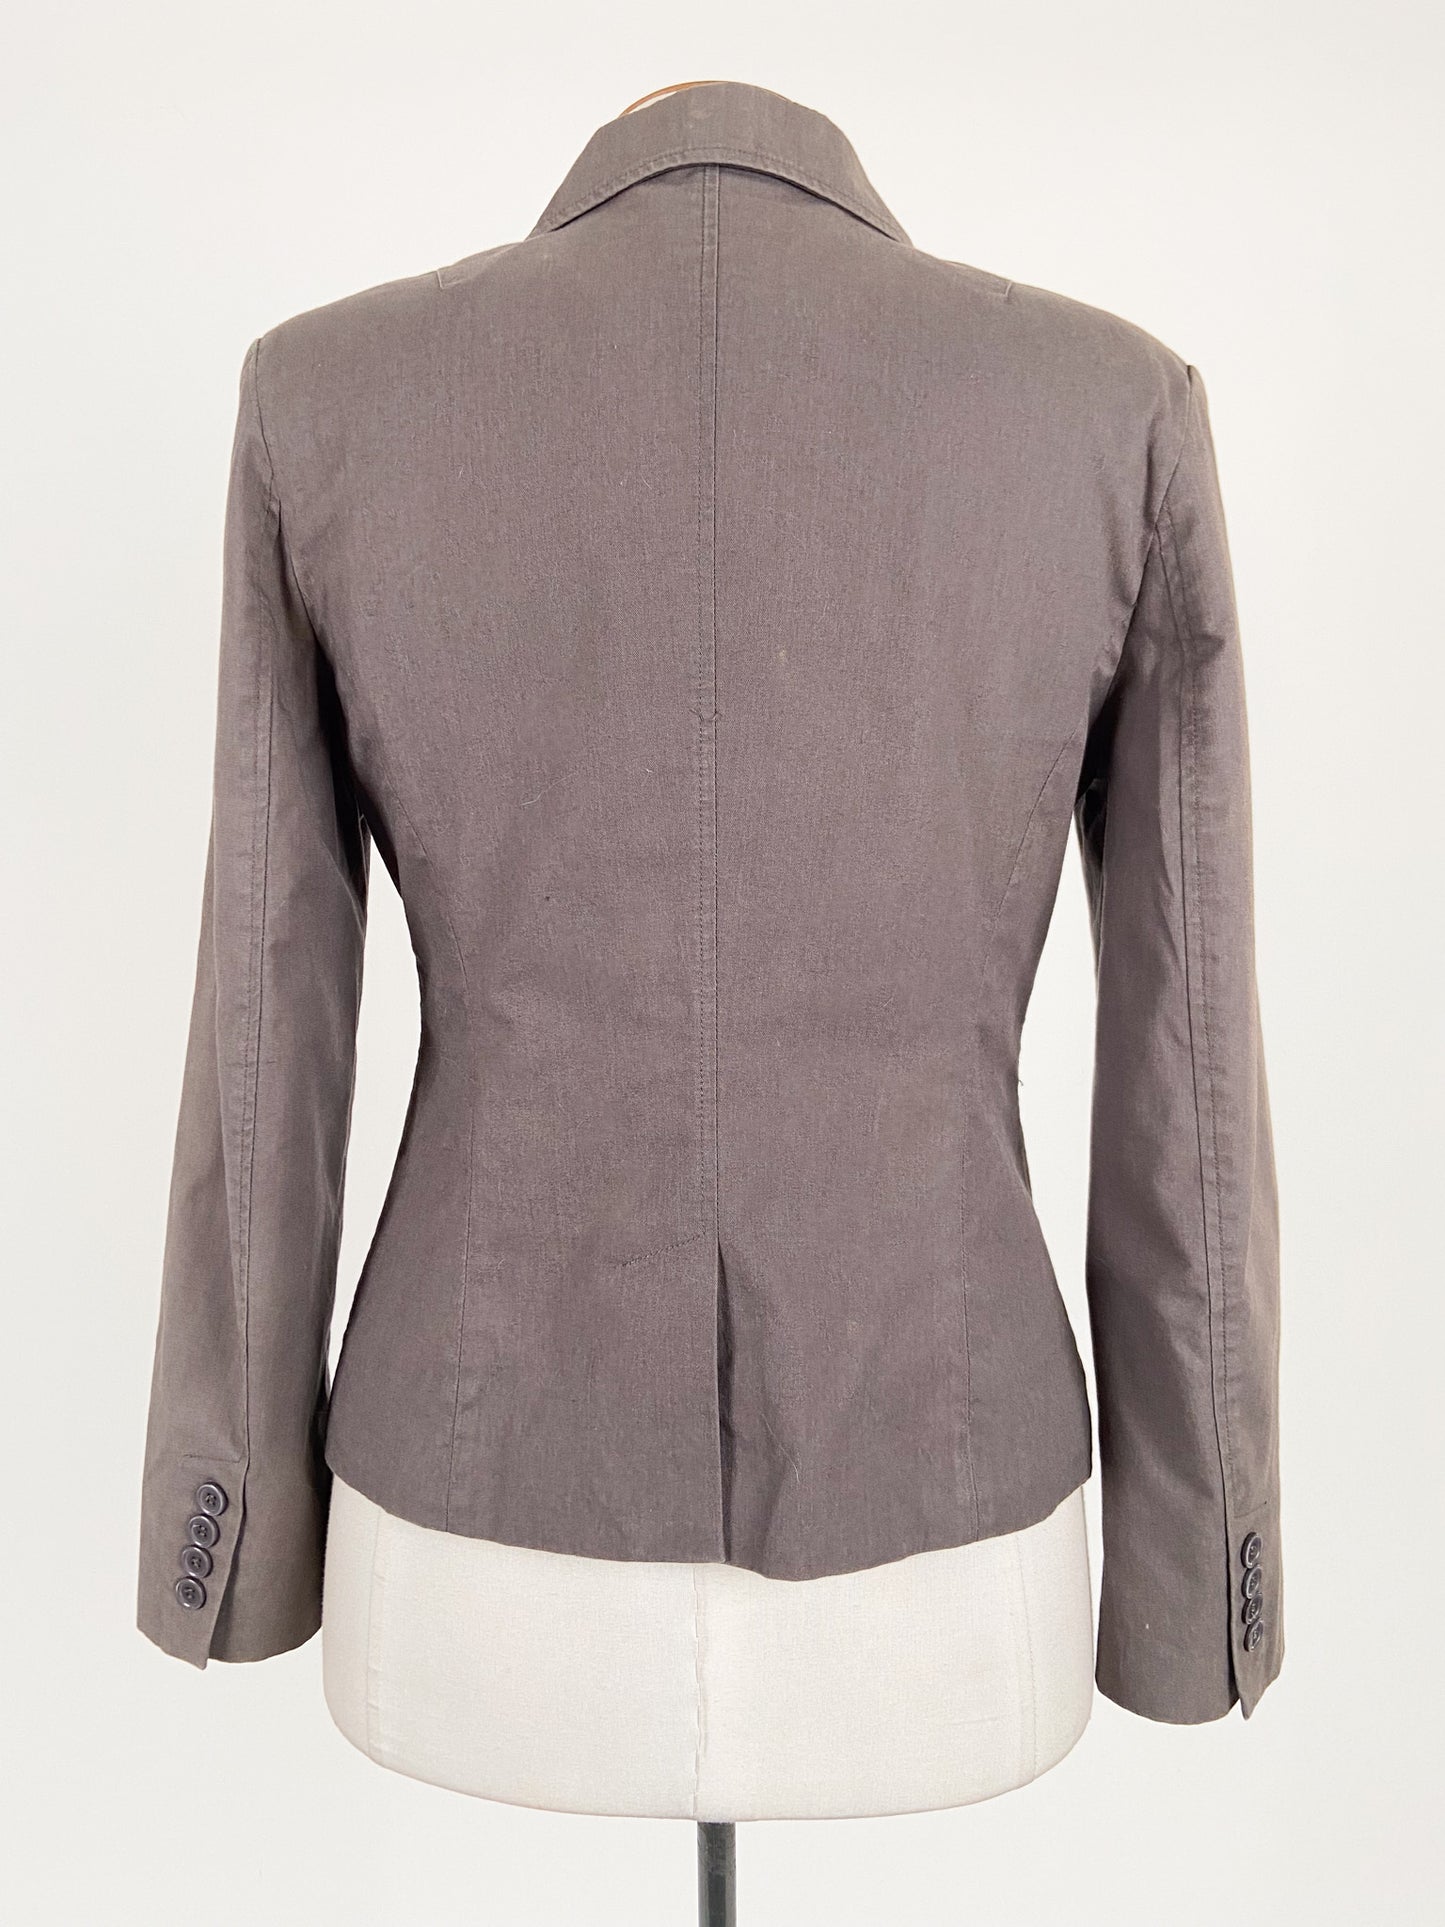 Max | Grey Workwear Jacket | Size 12